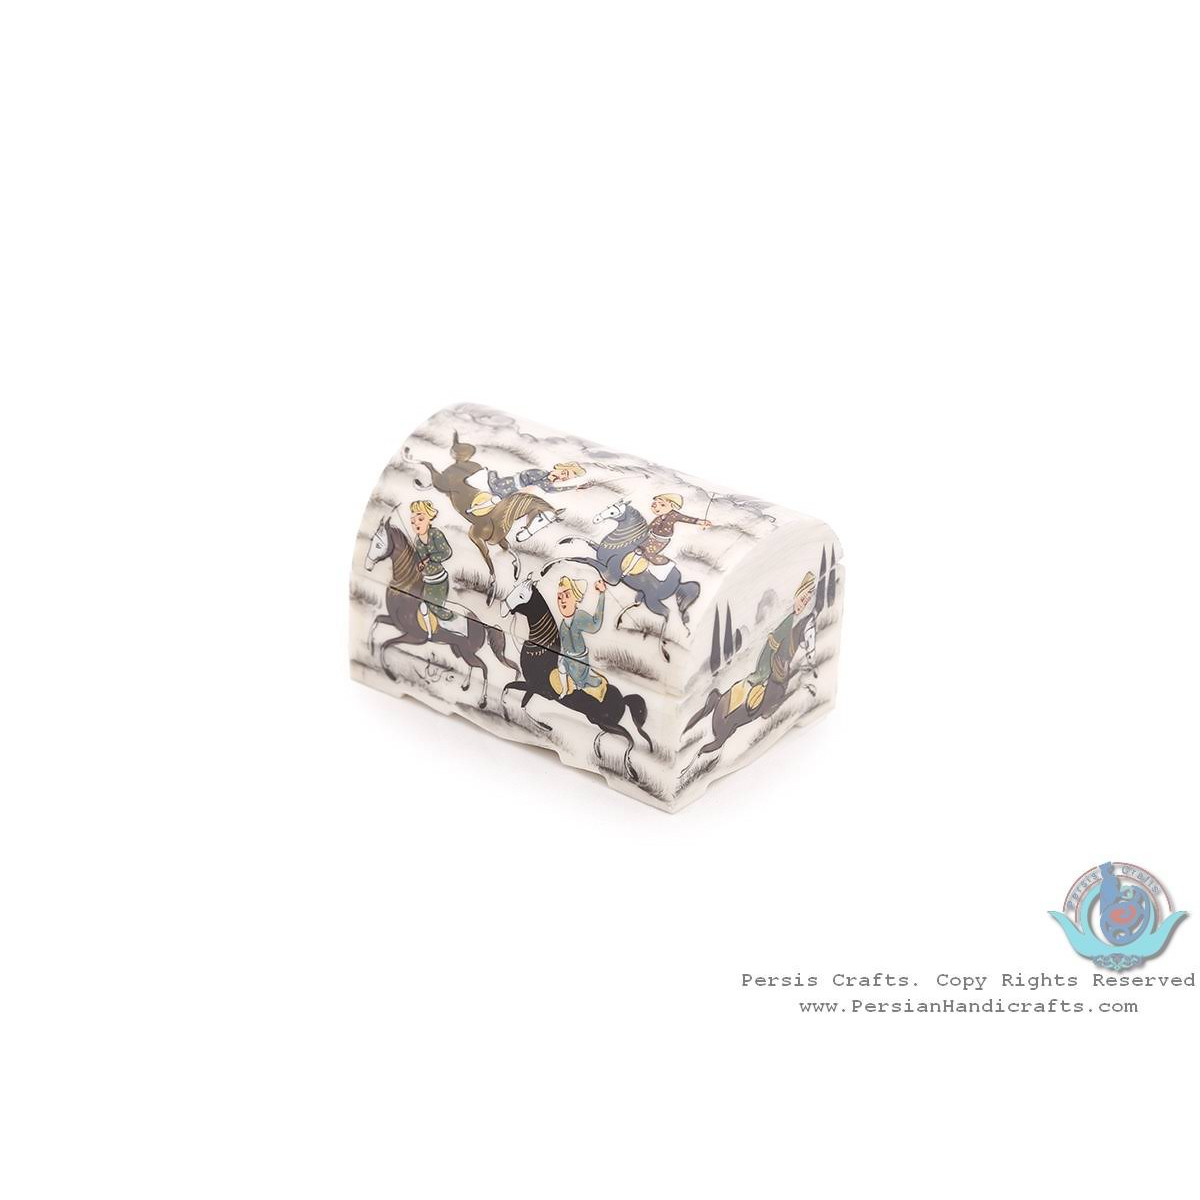 Chogan Miniature Round Trunk Shape Jewelry Box - HM3923-Persian Handicrafts